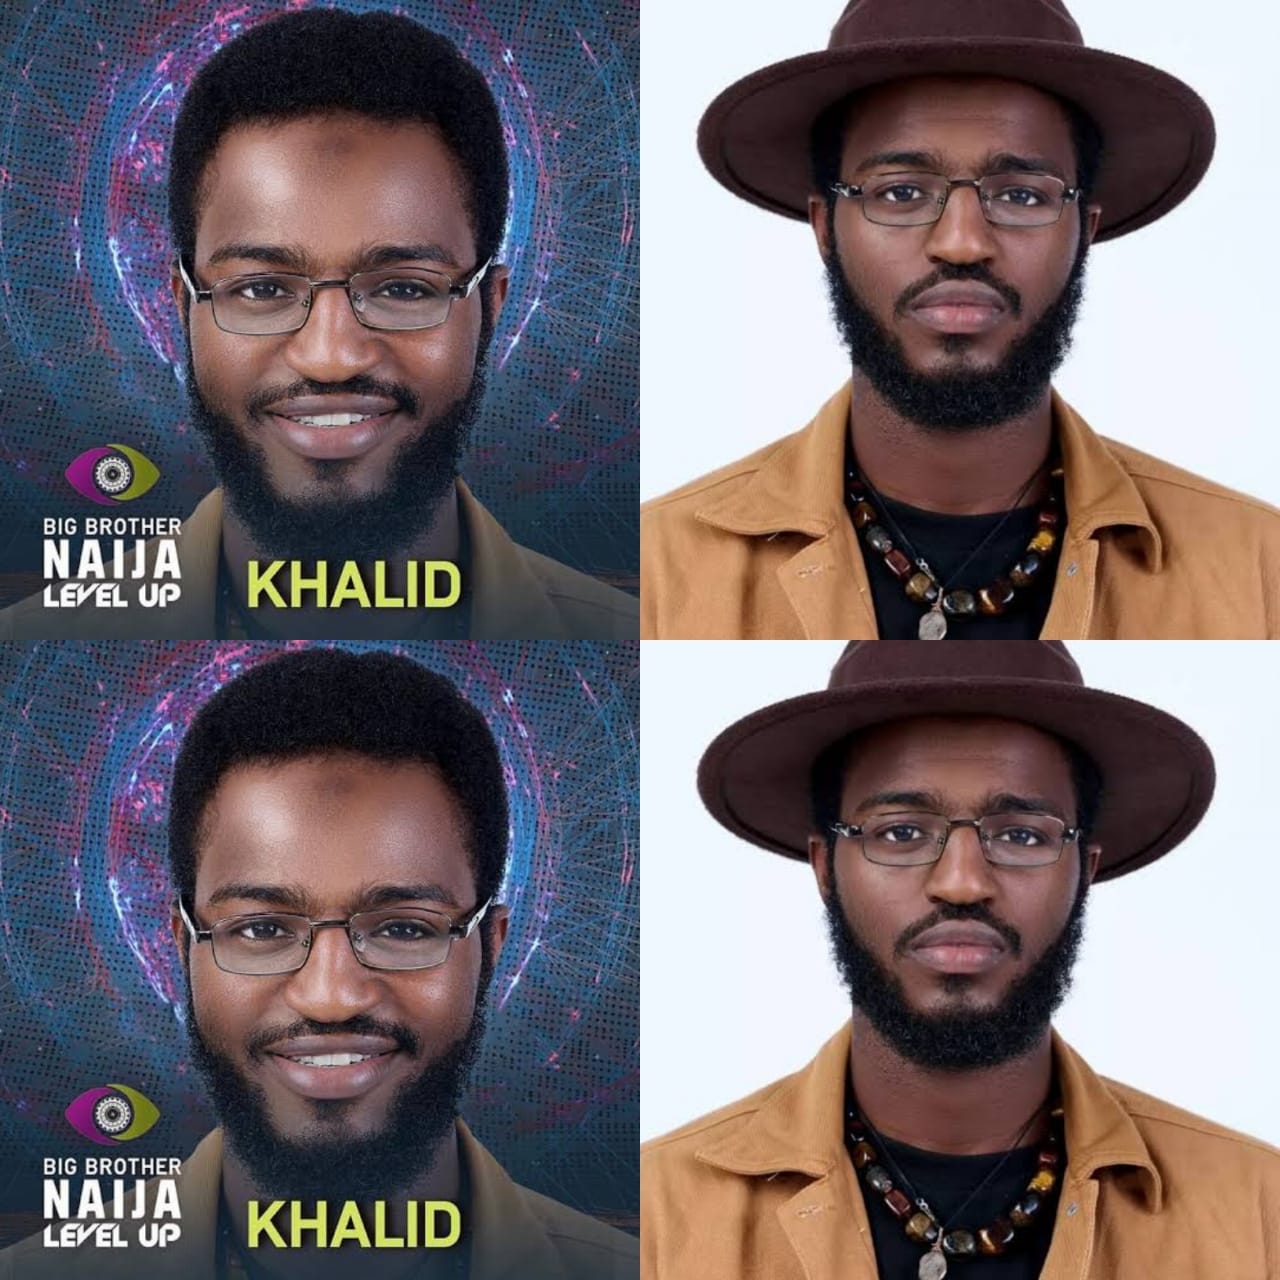 #Khalid